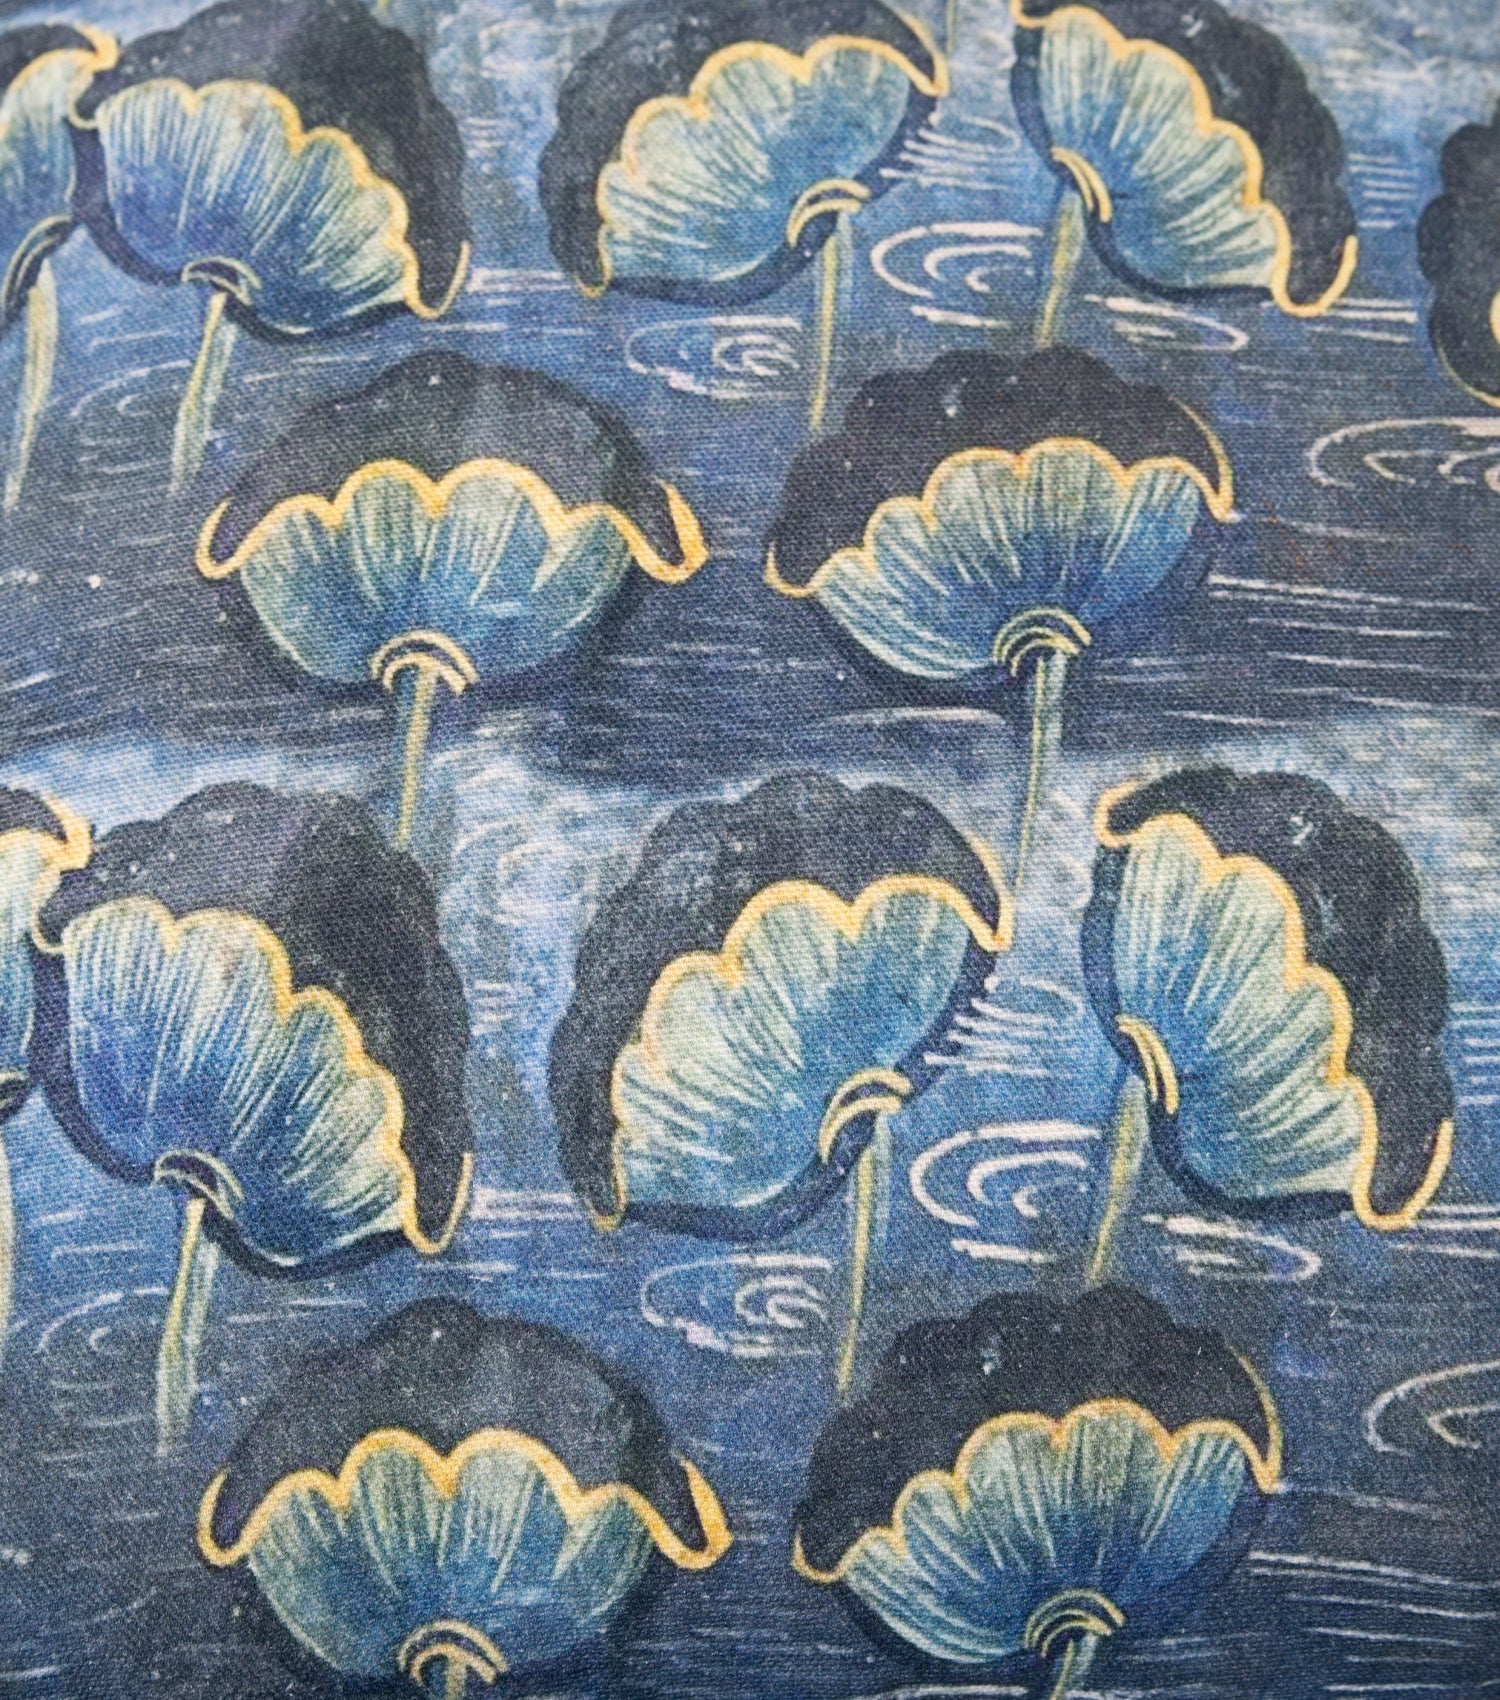 Blue Printed Cotton Cushion Cover